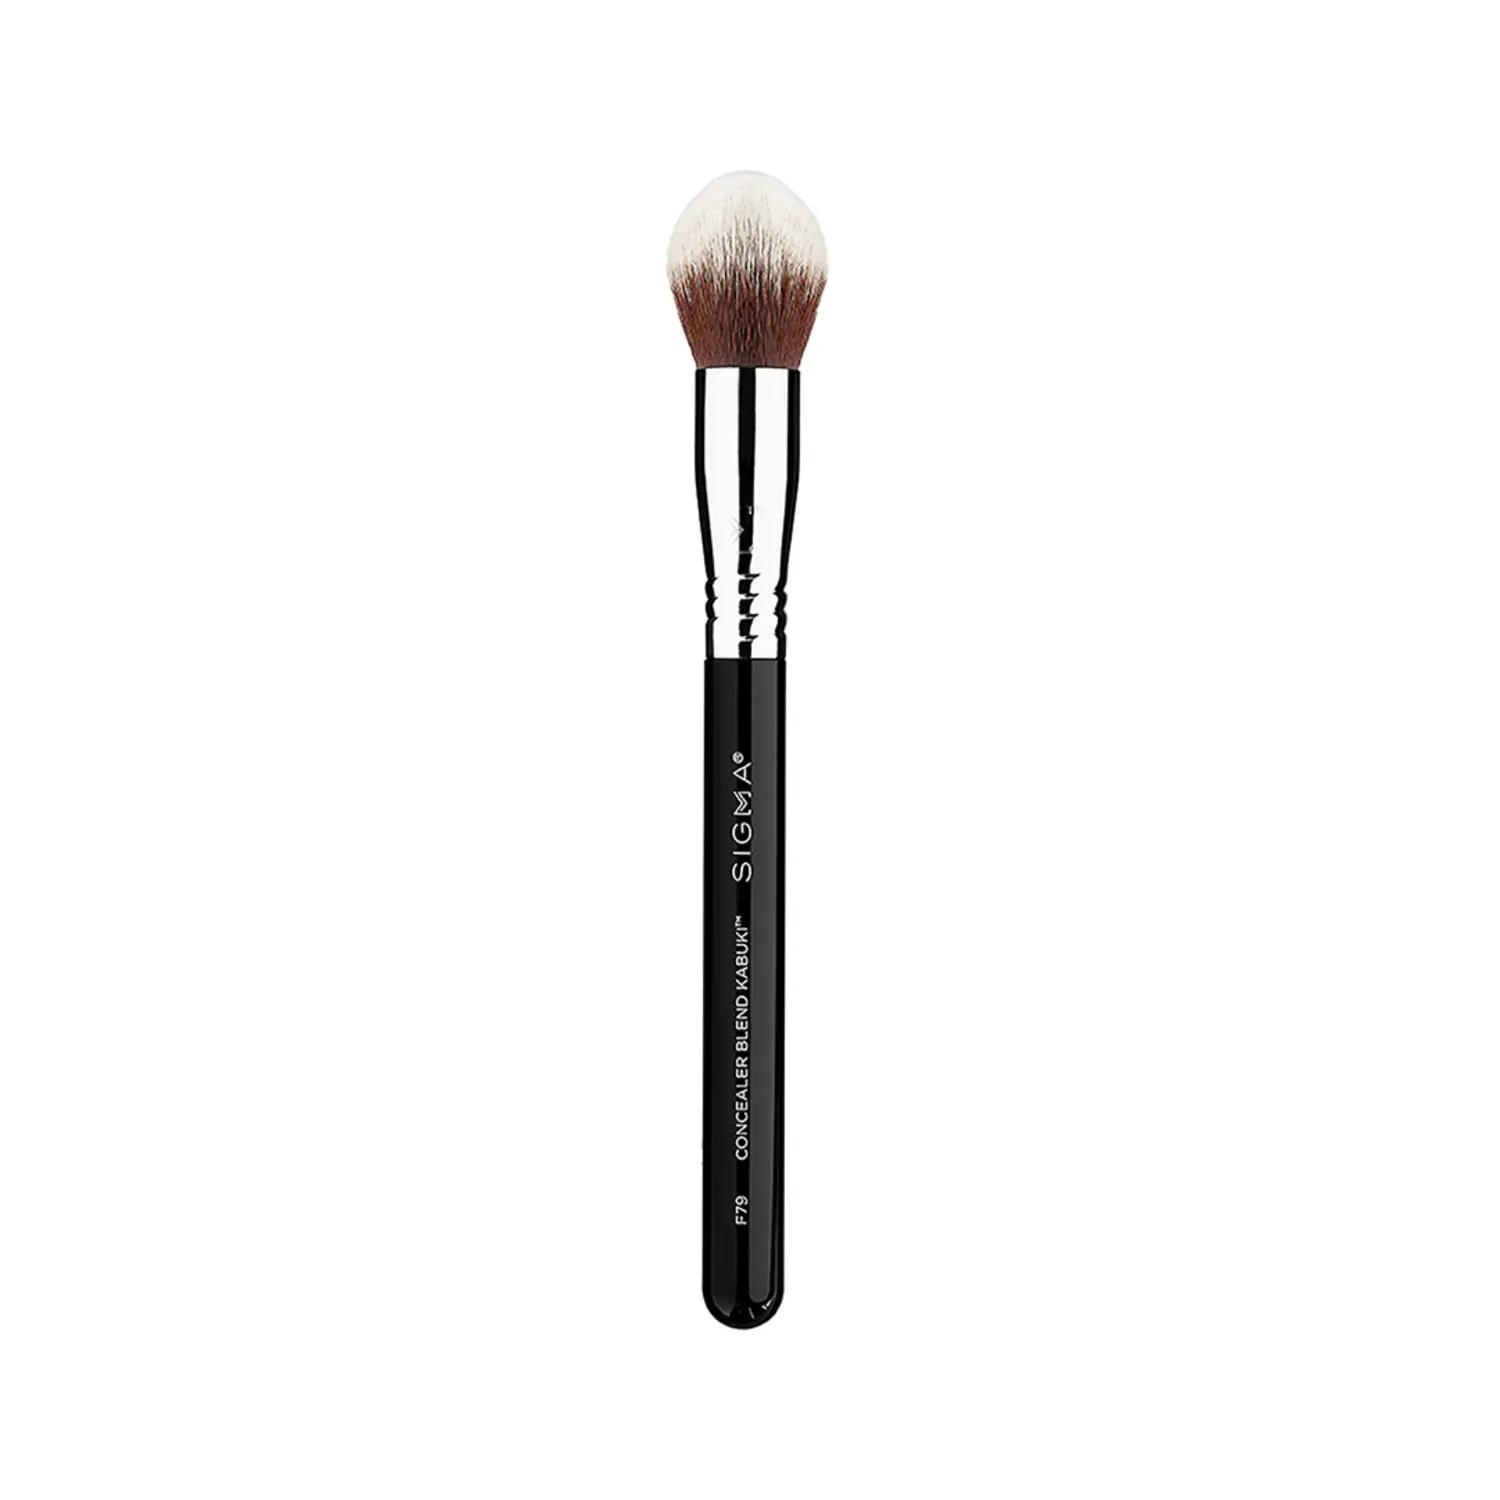 Sigma Beauty F79 Concealer Blend Kabuki Brush